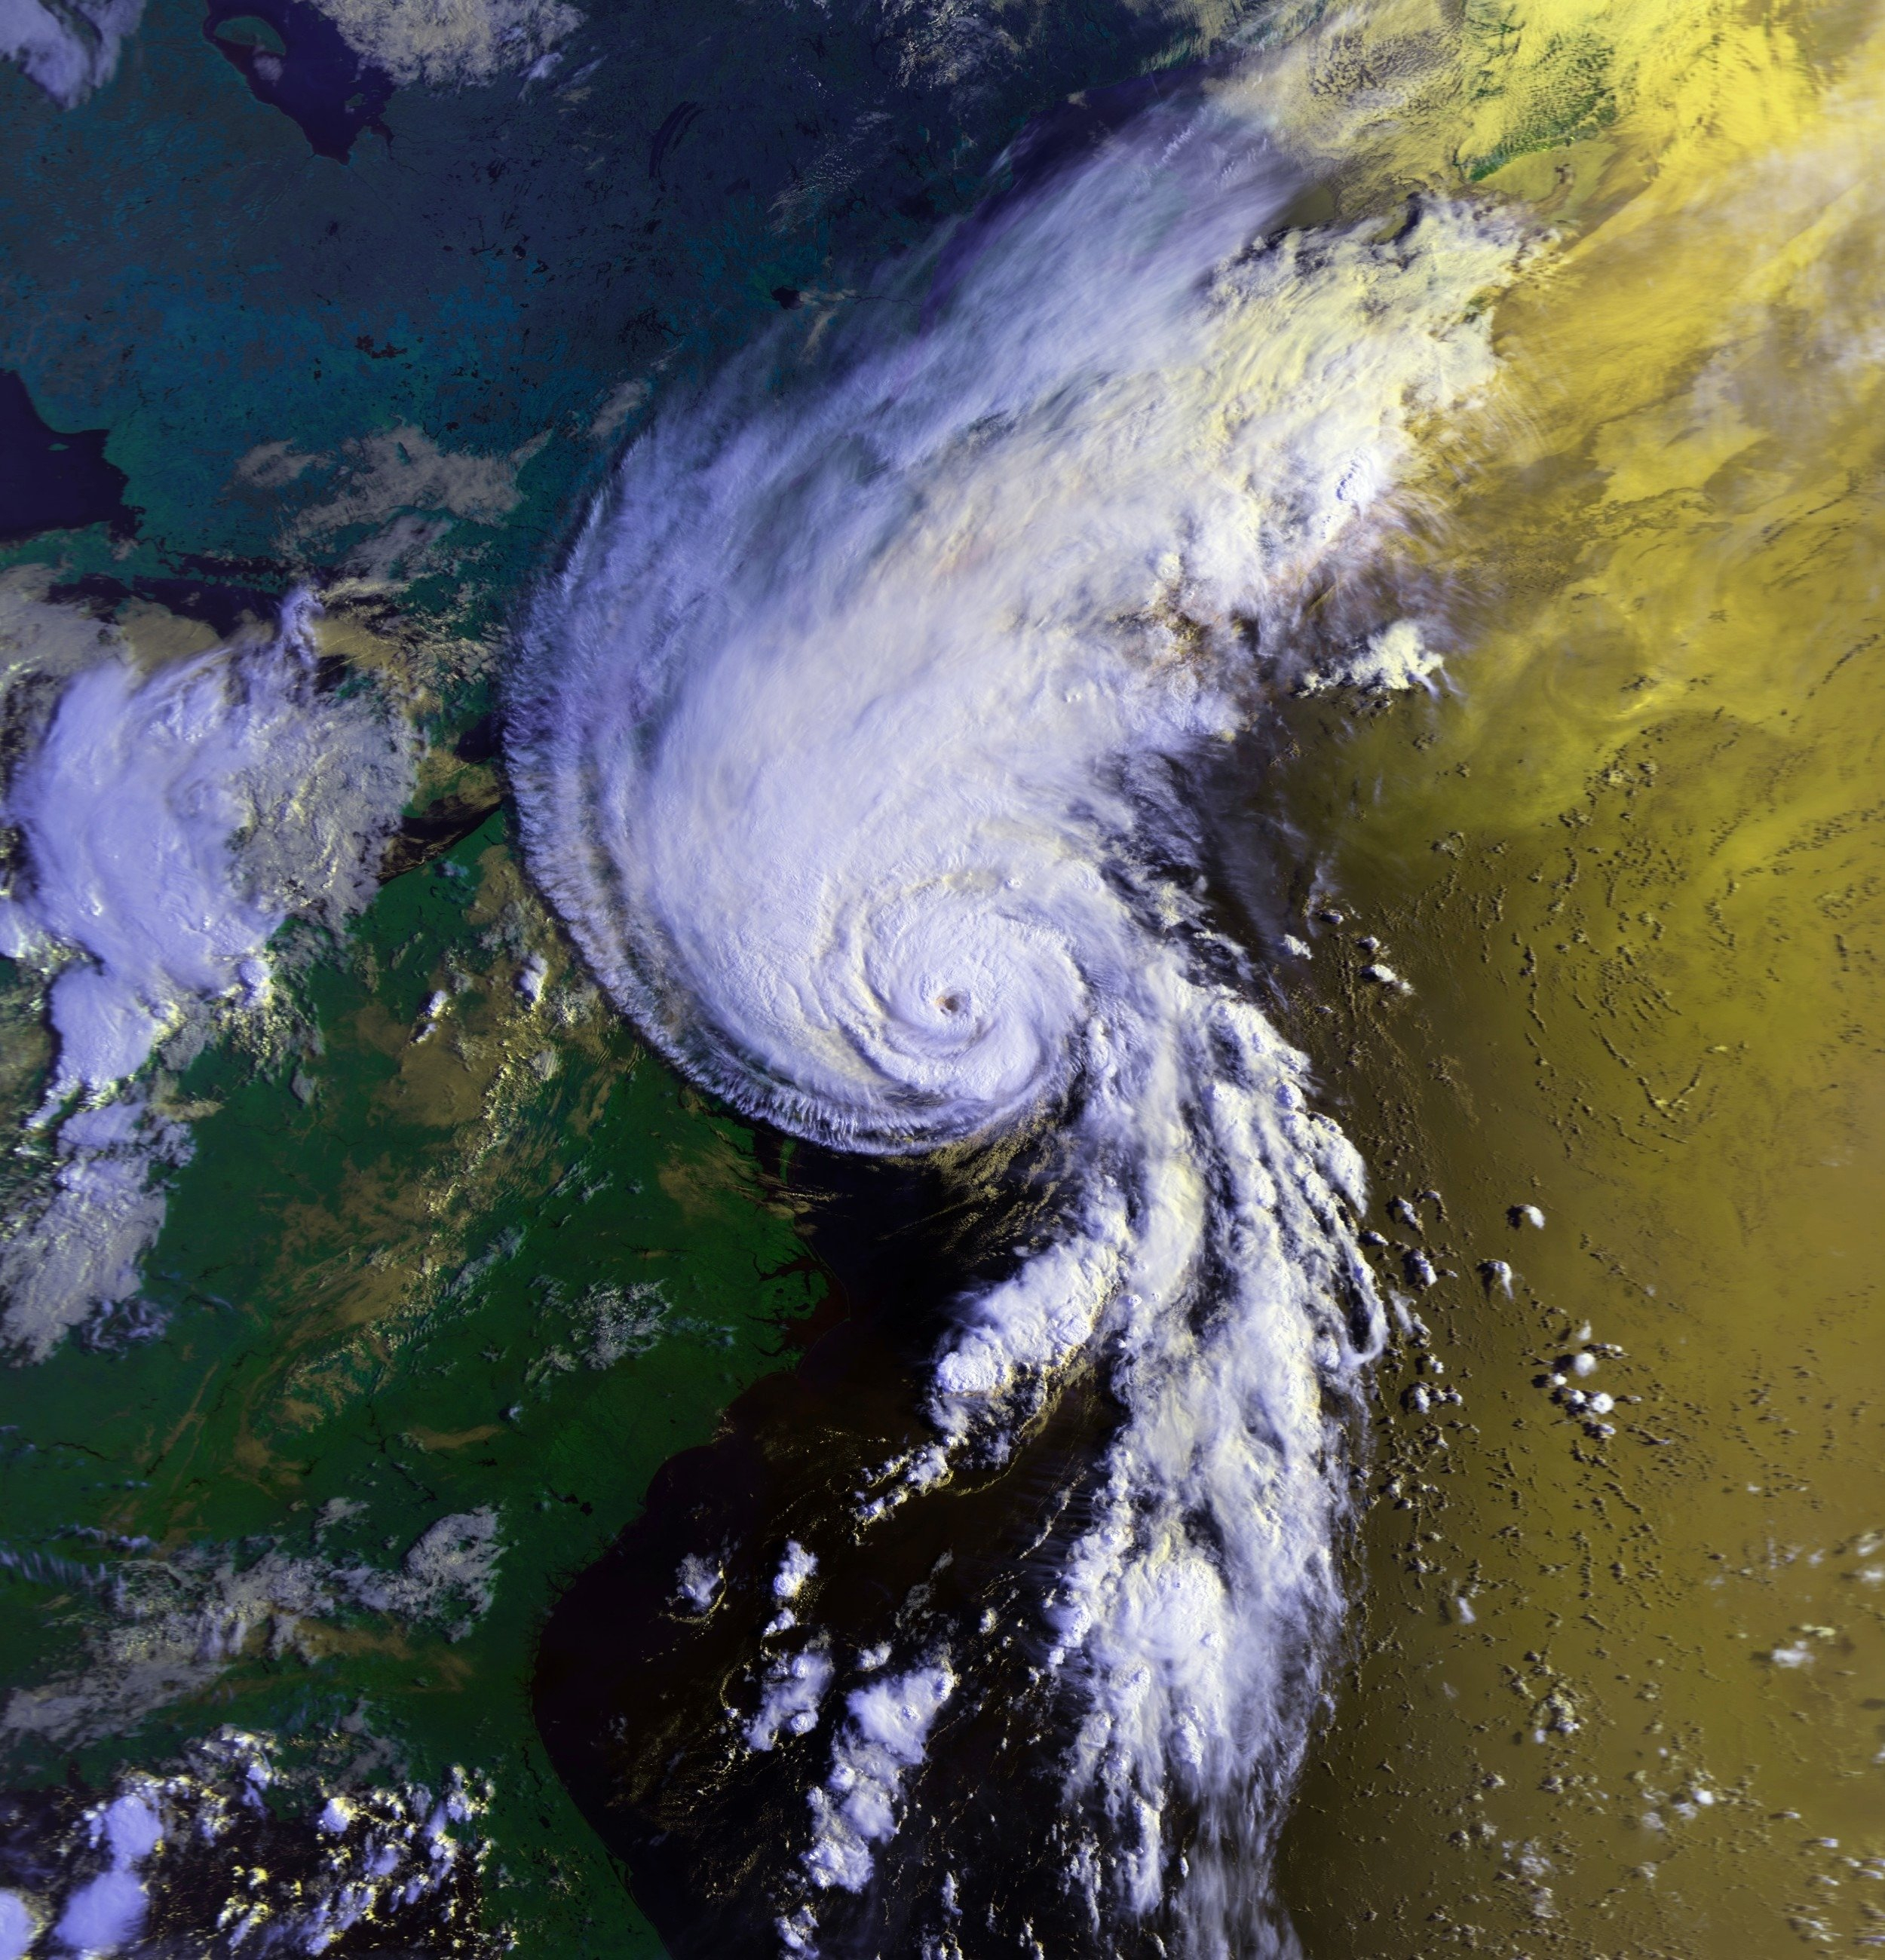 Циклоны тихого океана. Тропические циклоны Тайфуны. Ураган Тайфун циклон. Hurricane – Cyclone – Typhoon. Тайфун в океане.